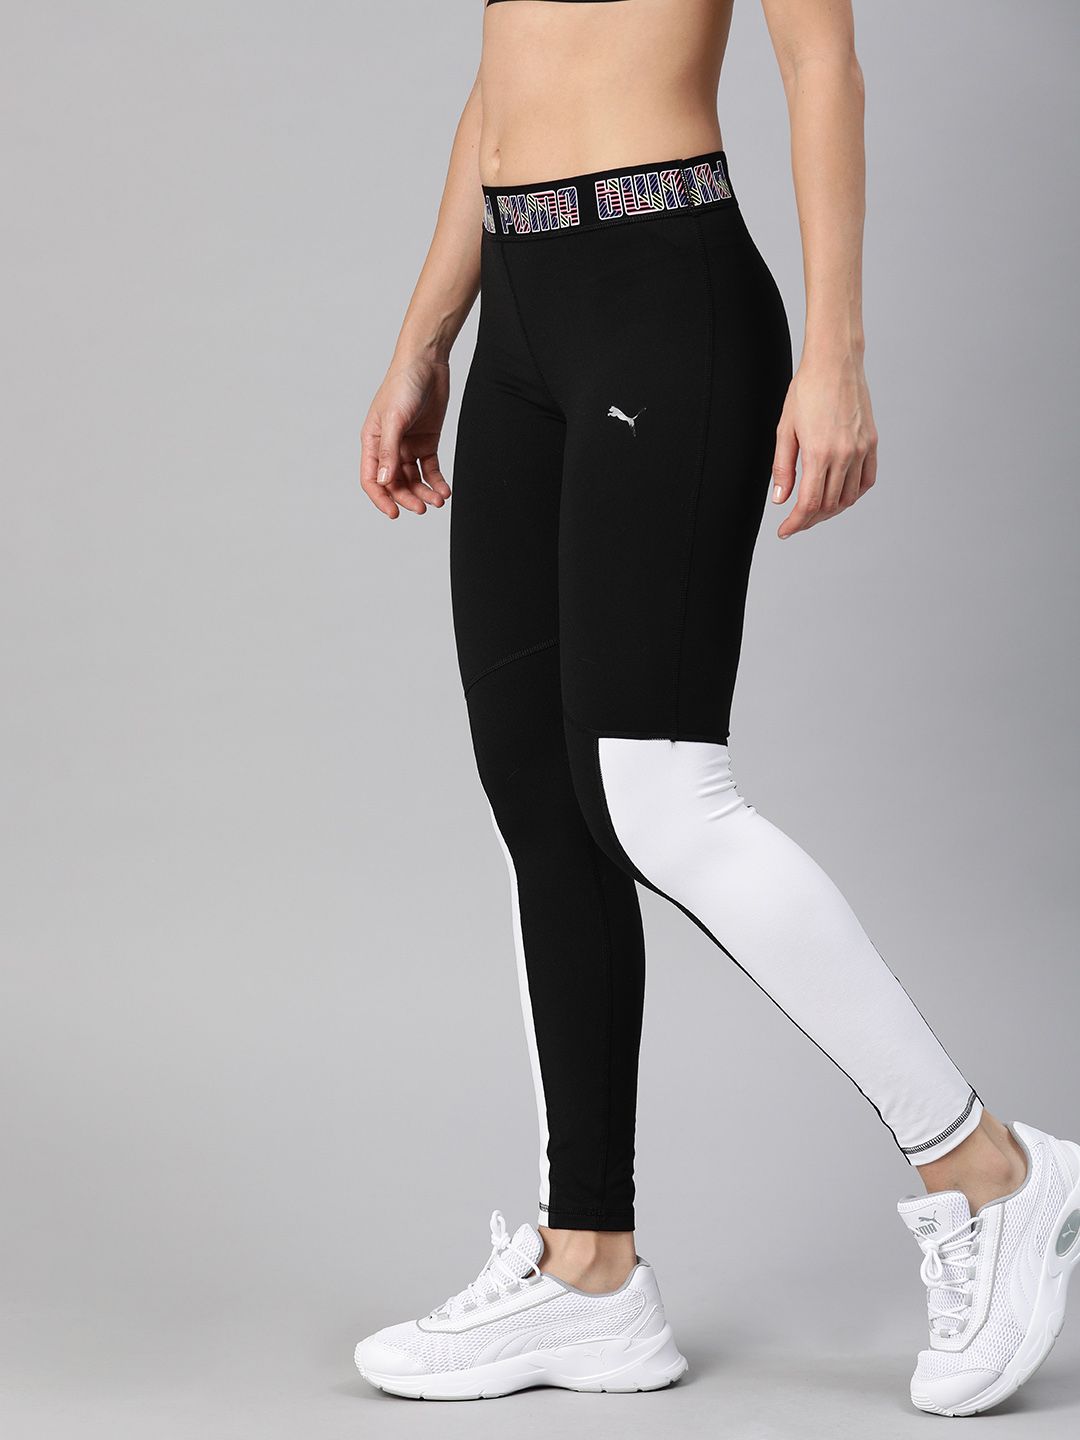 Puma Women Black & White Colourblocked DryCell Logo Elastic Running & Training Tights Price in India